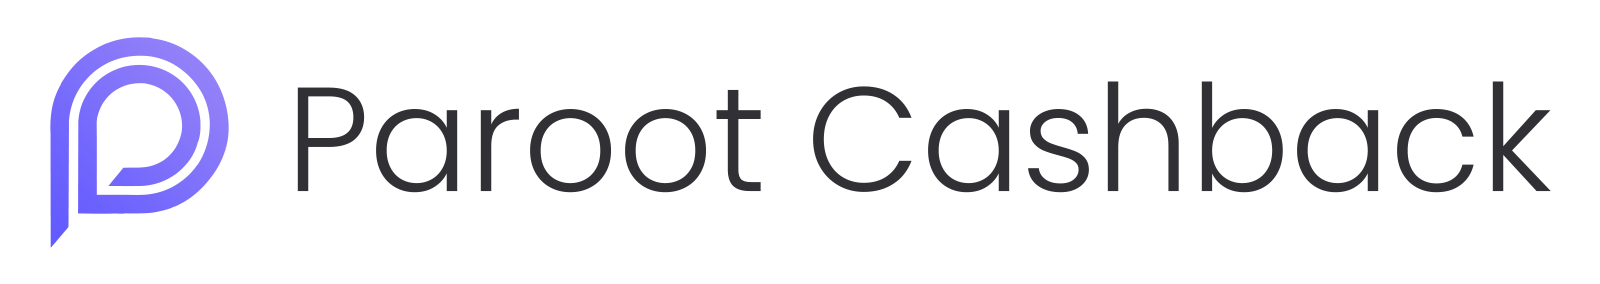 Paroot Cashback Logo